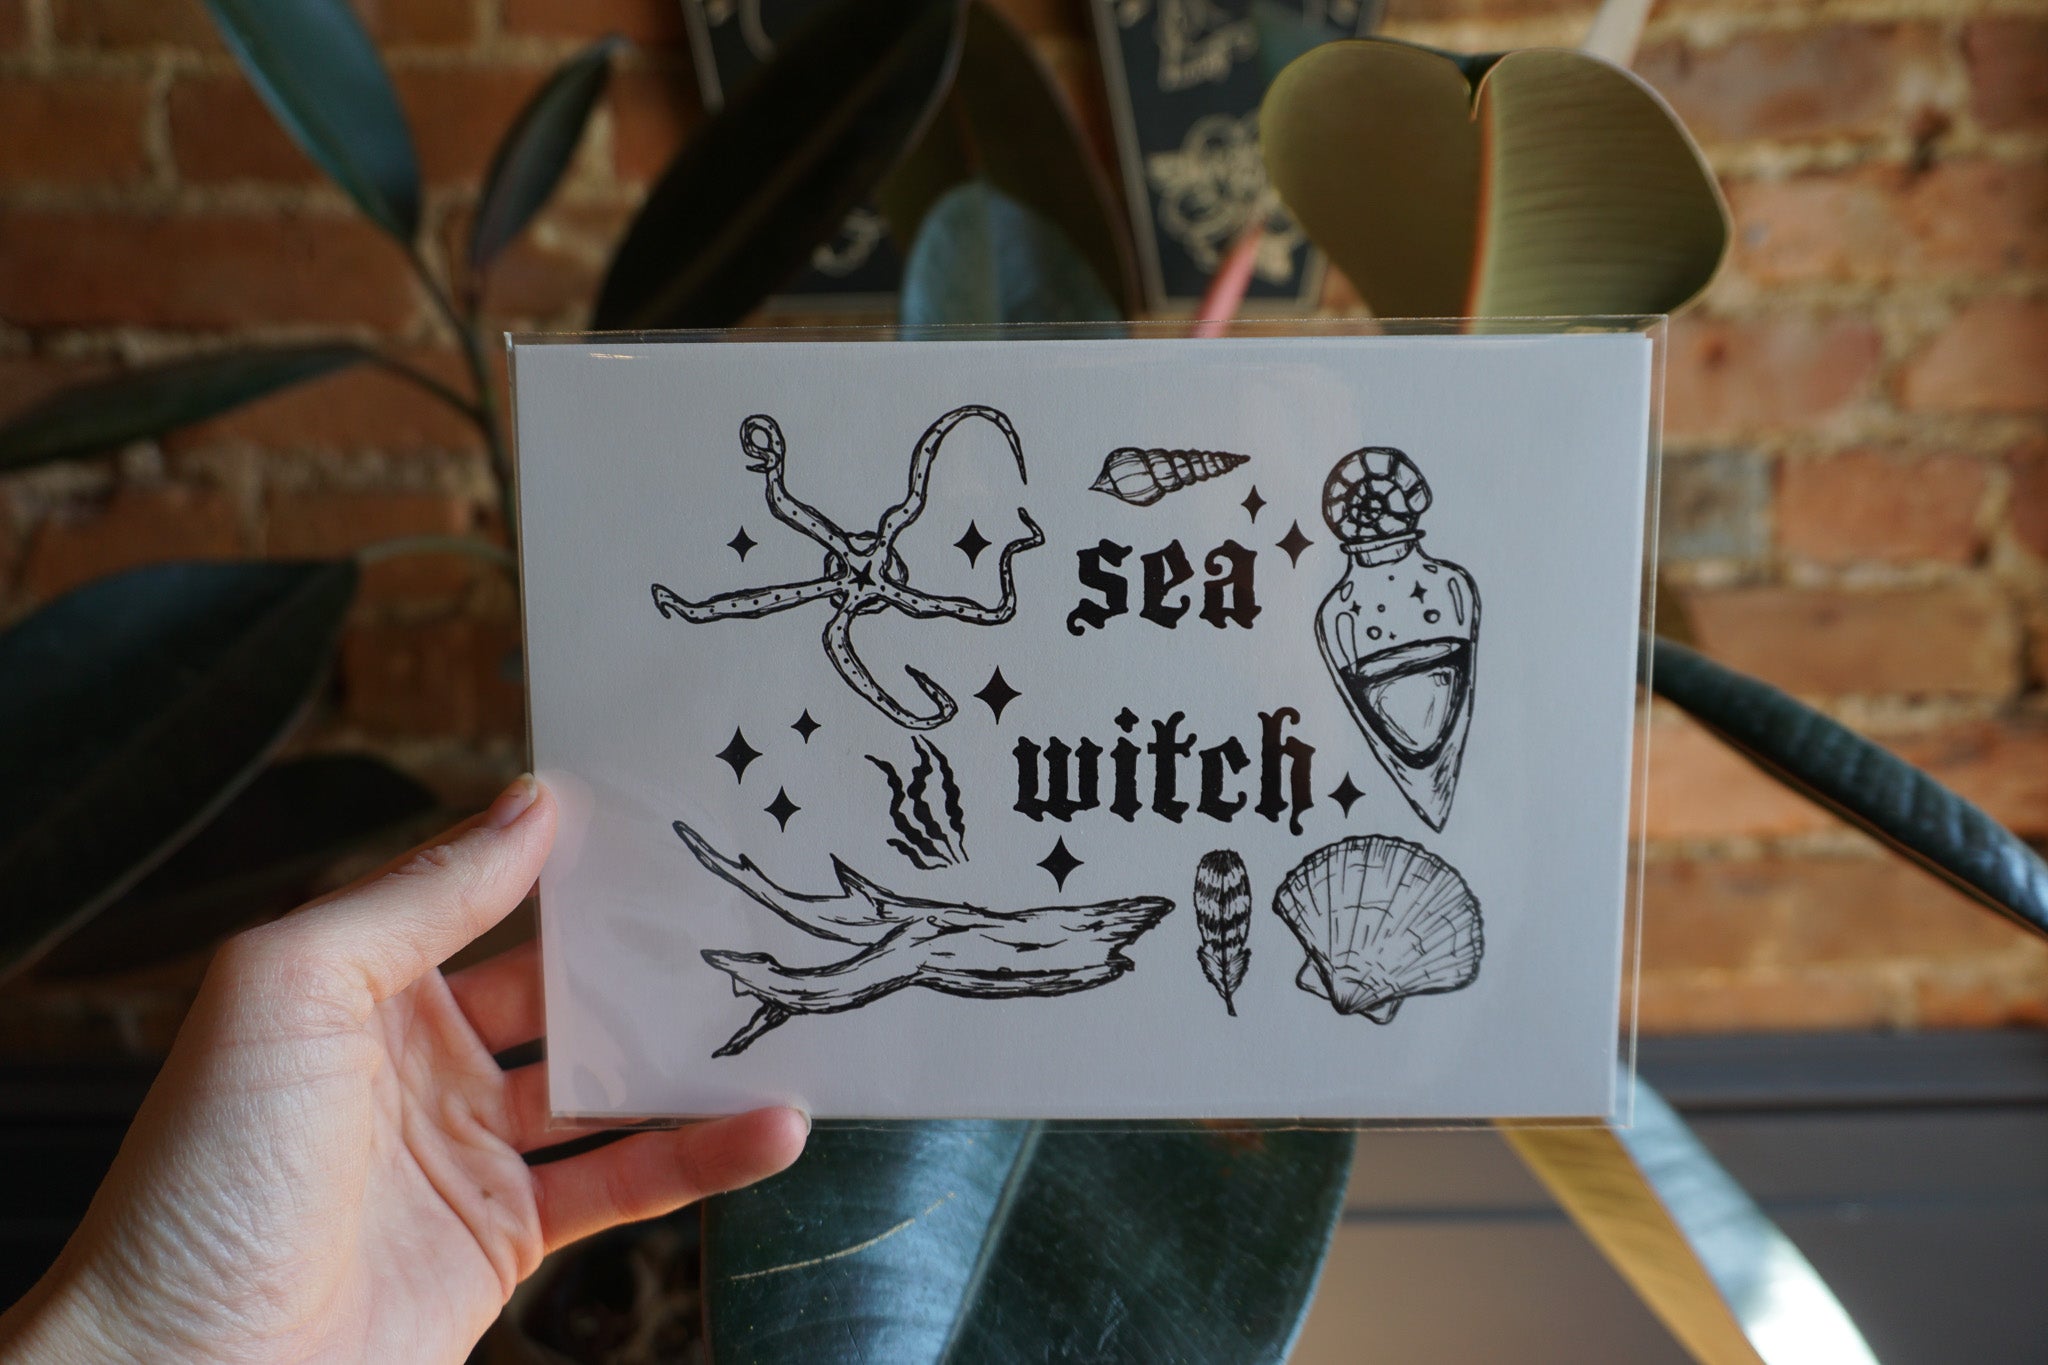 Sea Witch Print